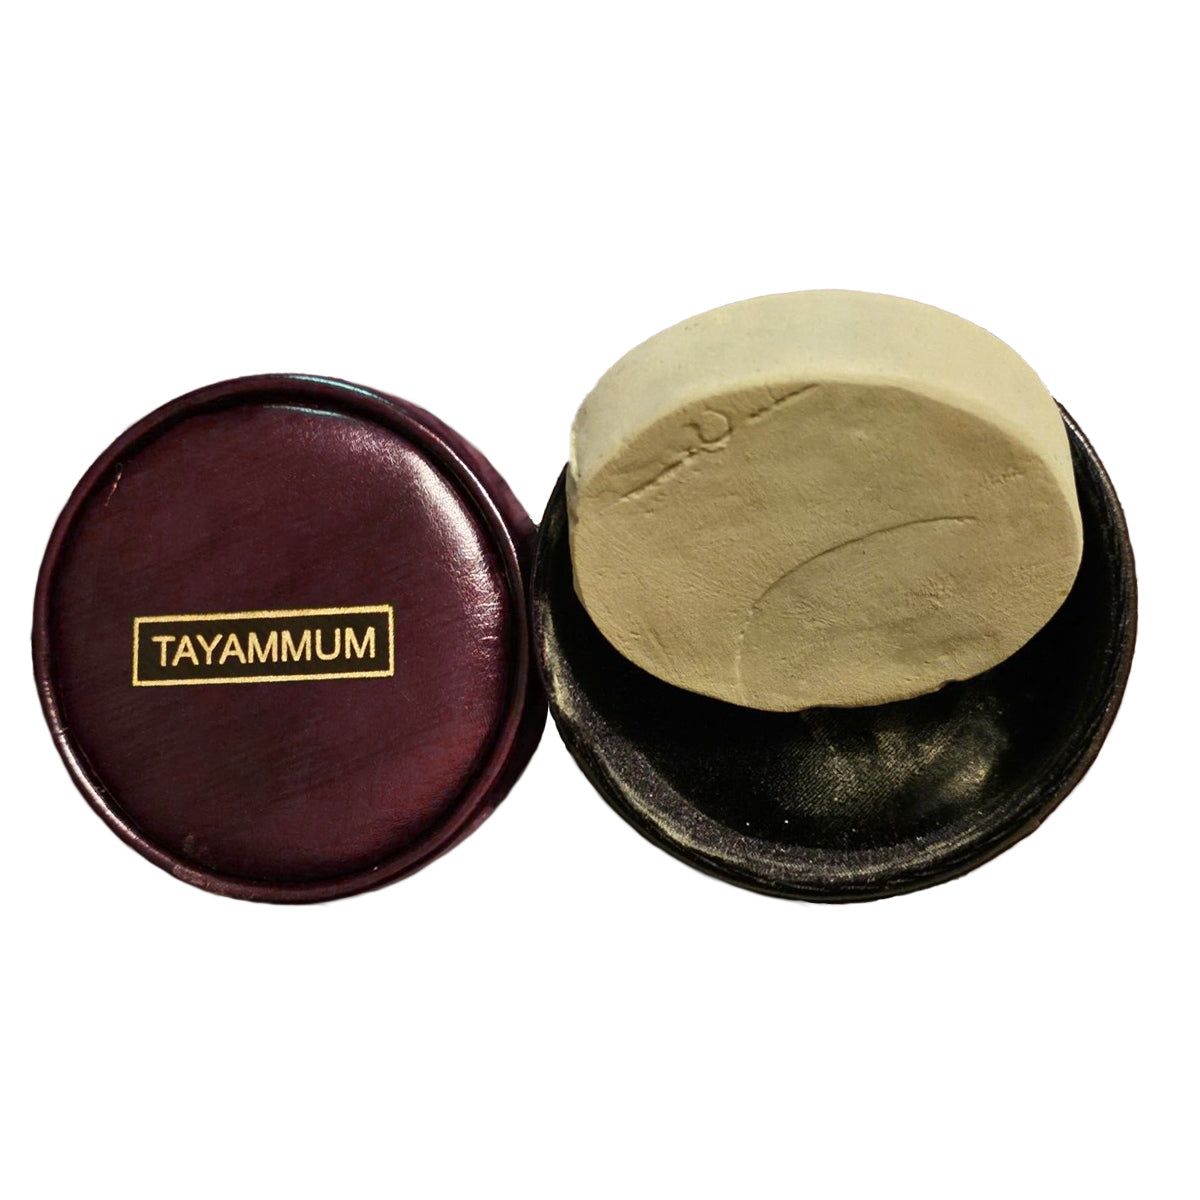 Portable Tayammum Stone in Stylish Leather Box